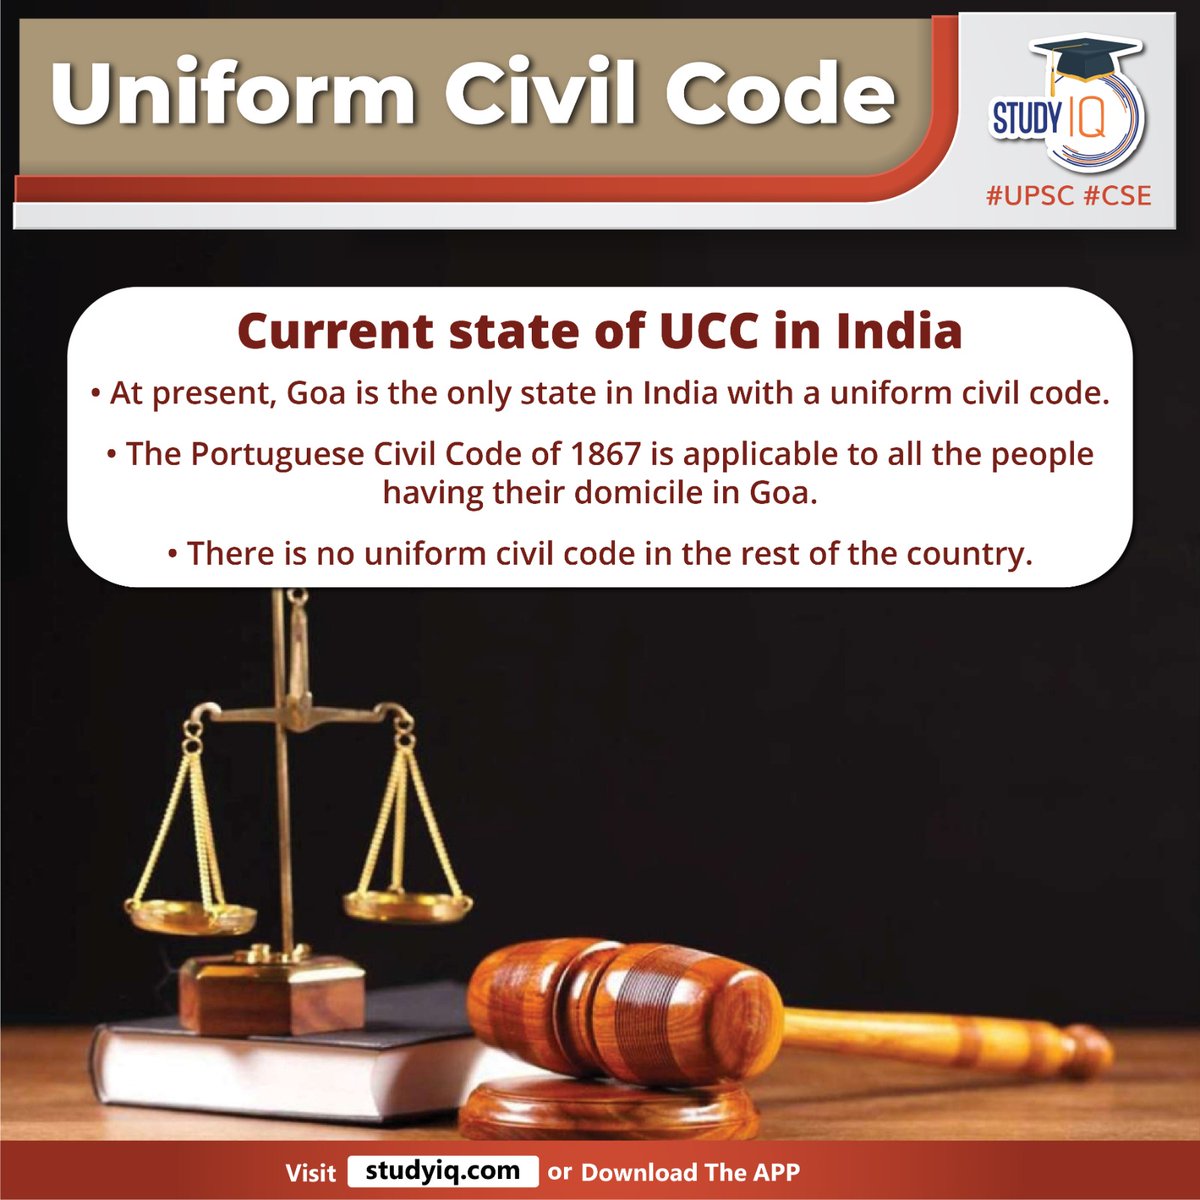 Uniform Civil Code

#uniformcivilcode #ucc #legalframework #personalmatters #marriage #divorce #religion #personallaws #article44 #constitutionofindia #indianconstitution #directiveprincipleofstatepolicy #dpsp #goa #protuguesecivilcode #india #upsc #cse #ips #ias